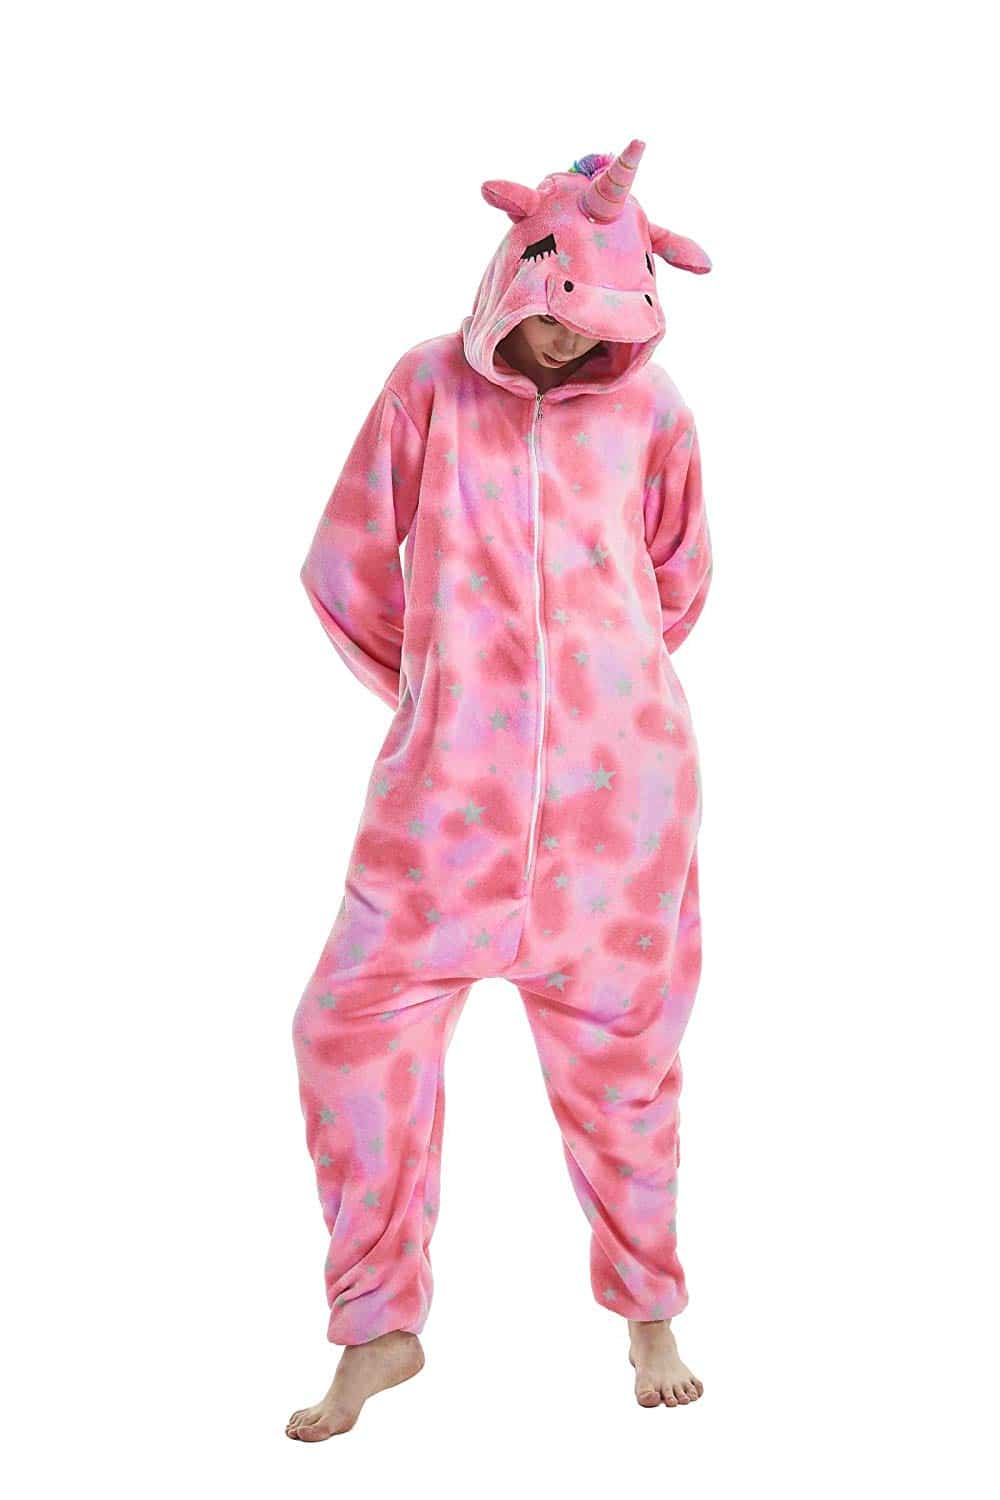 Disfraz Pijama Unicornio rosa